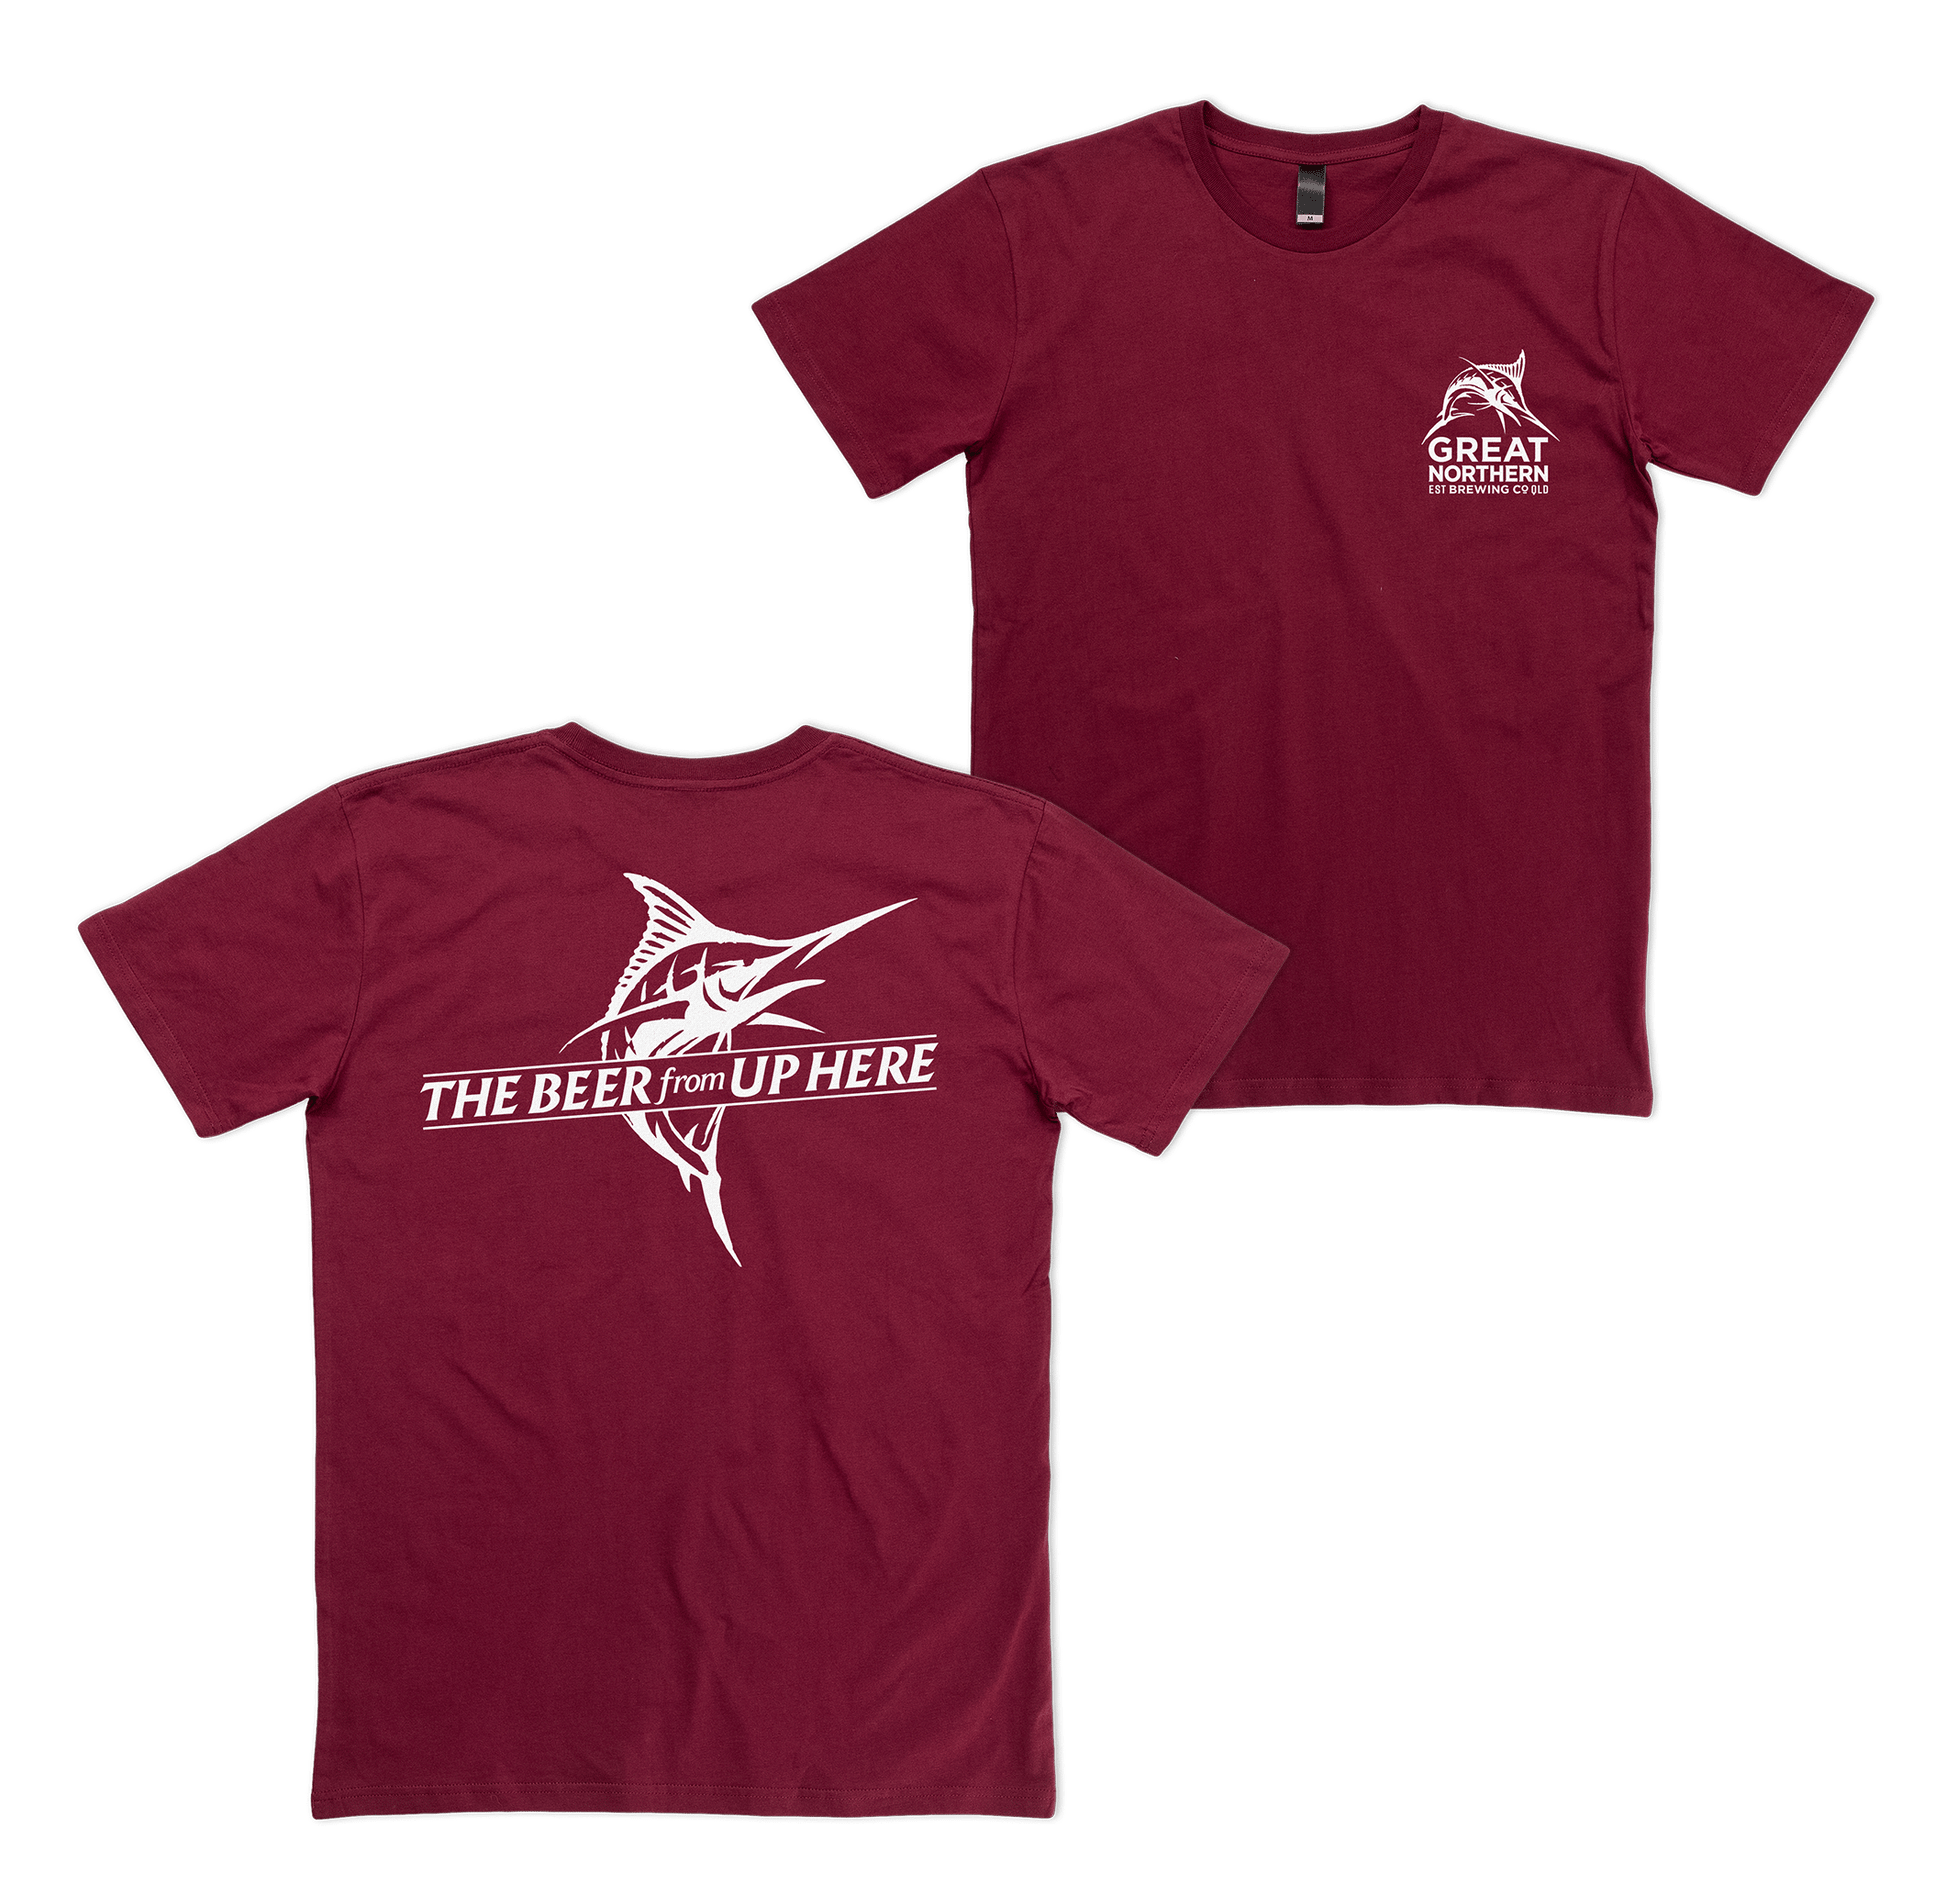 Marlin Strike Tee T-Shirt Great Northern